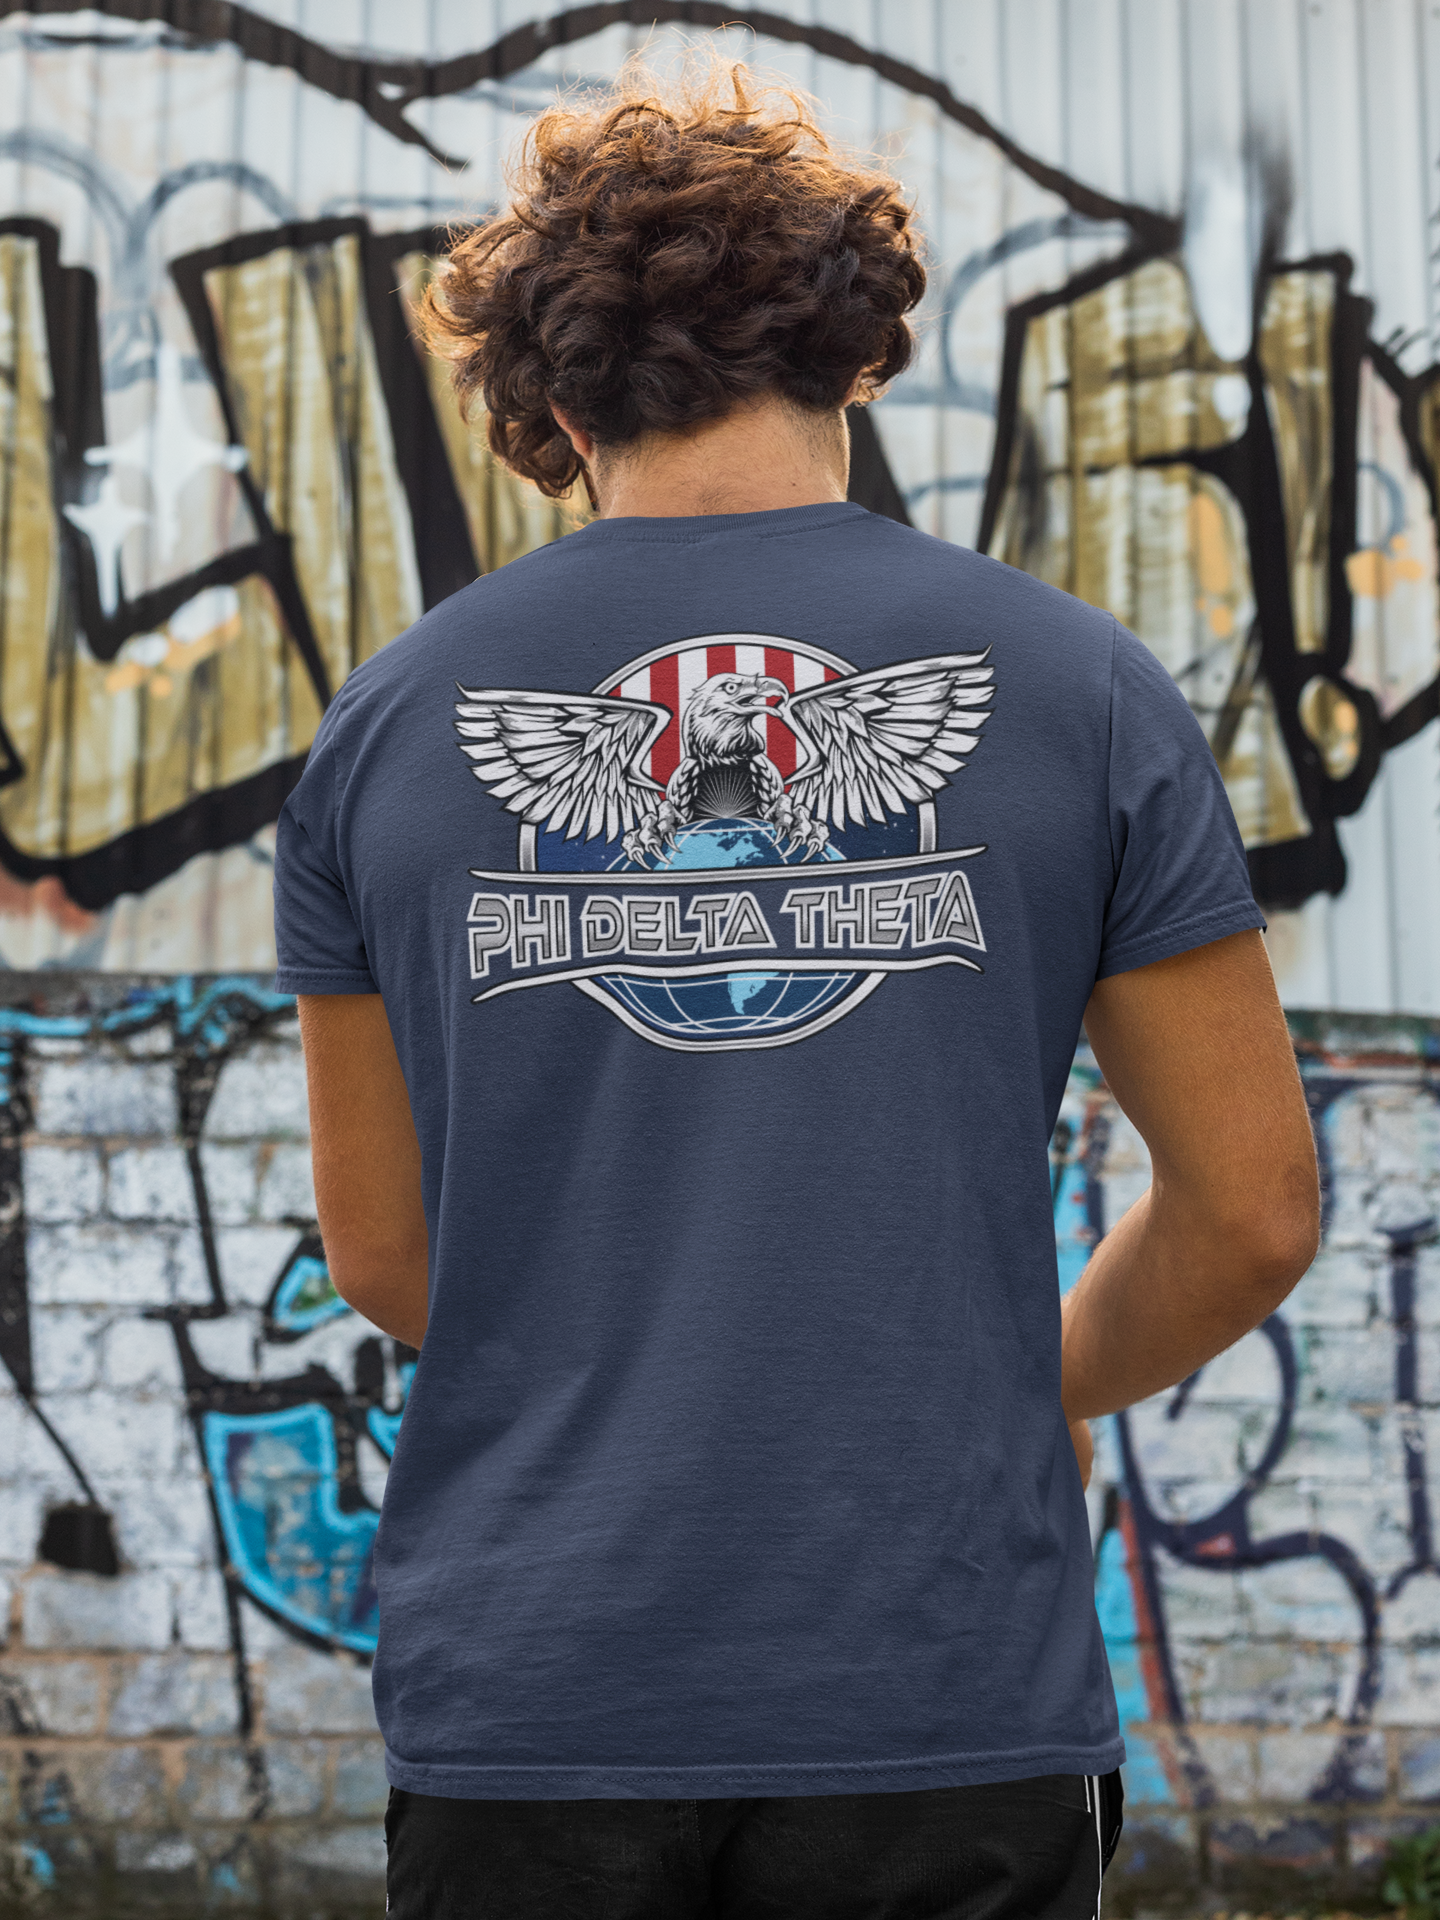 Phi Delta Theta Graphic T-Shirt | The Fraternal Order | phi delta theta fraternity greek apparel model